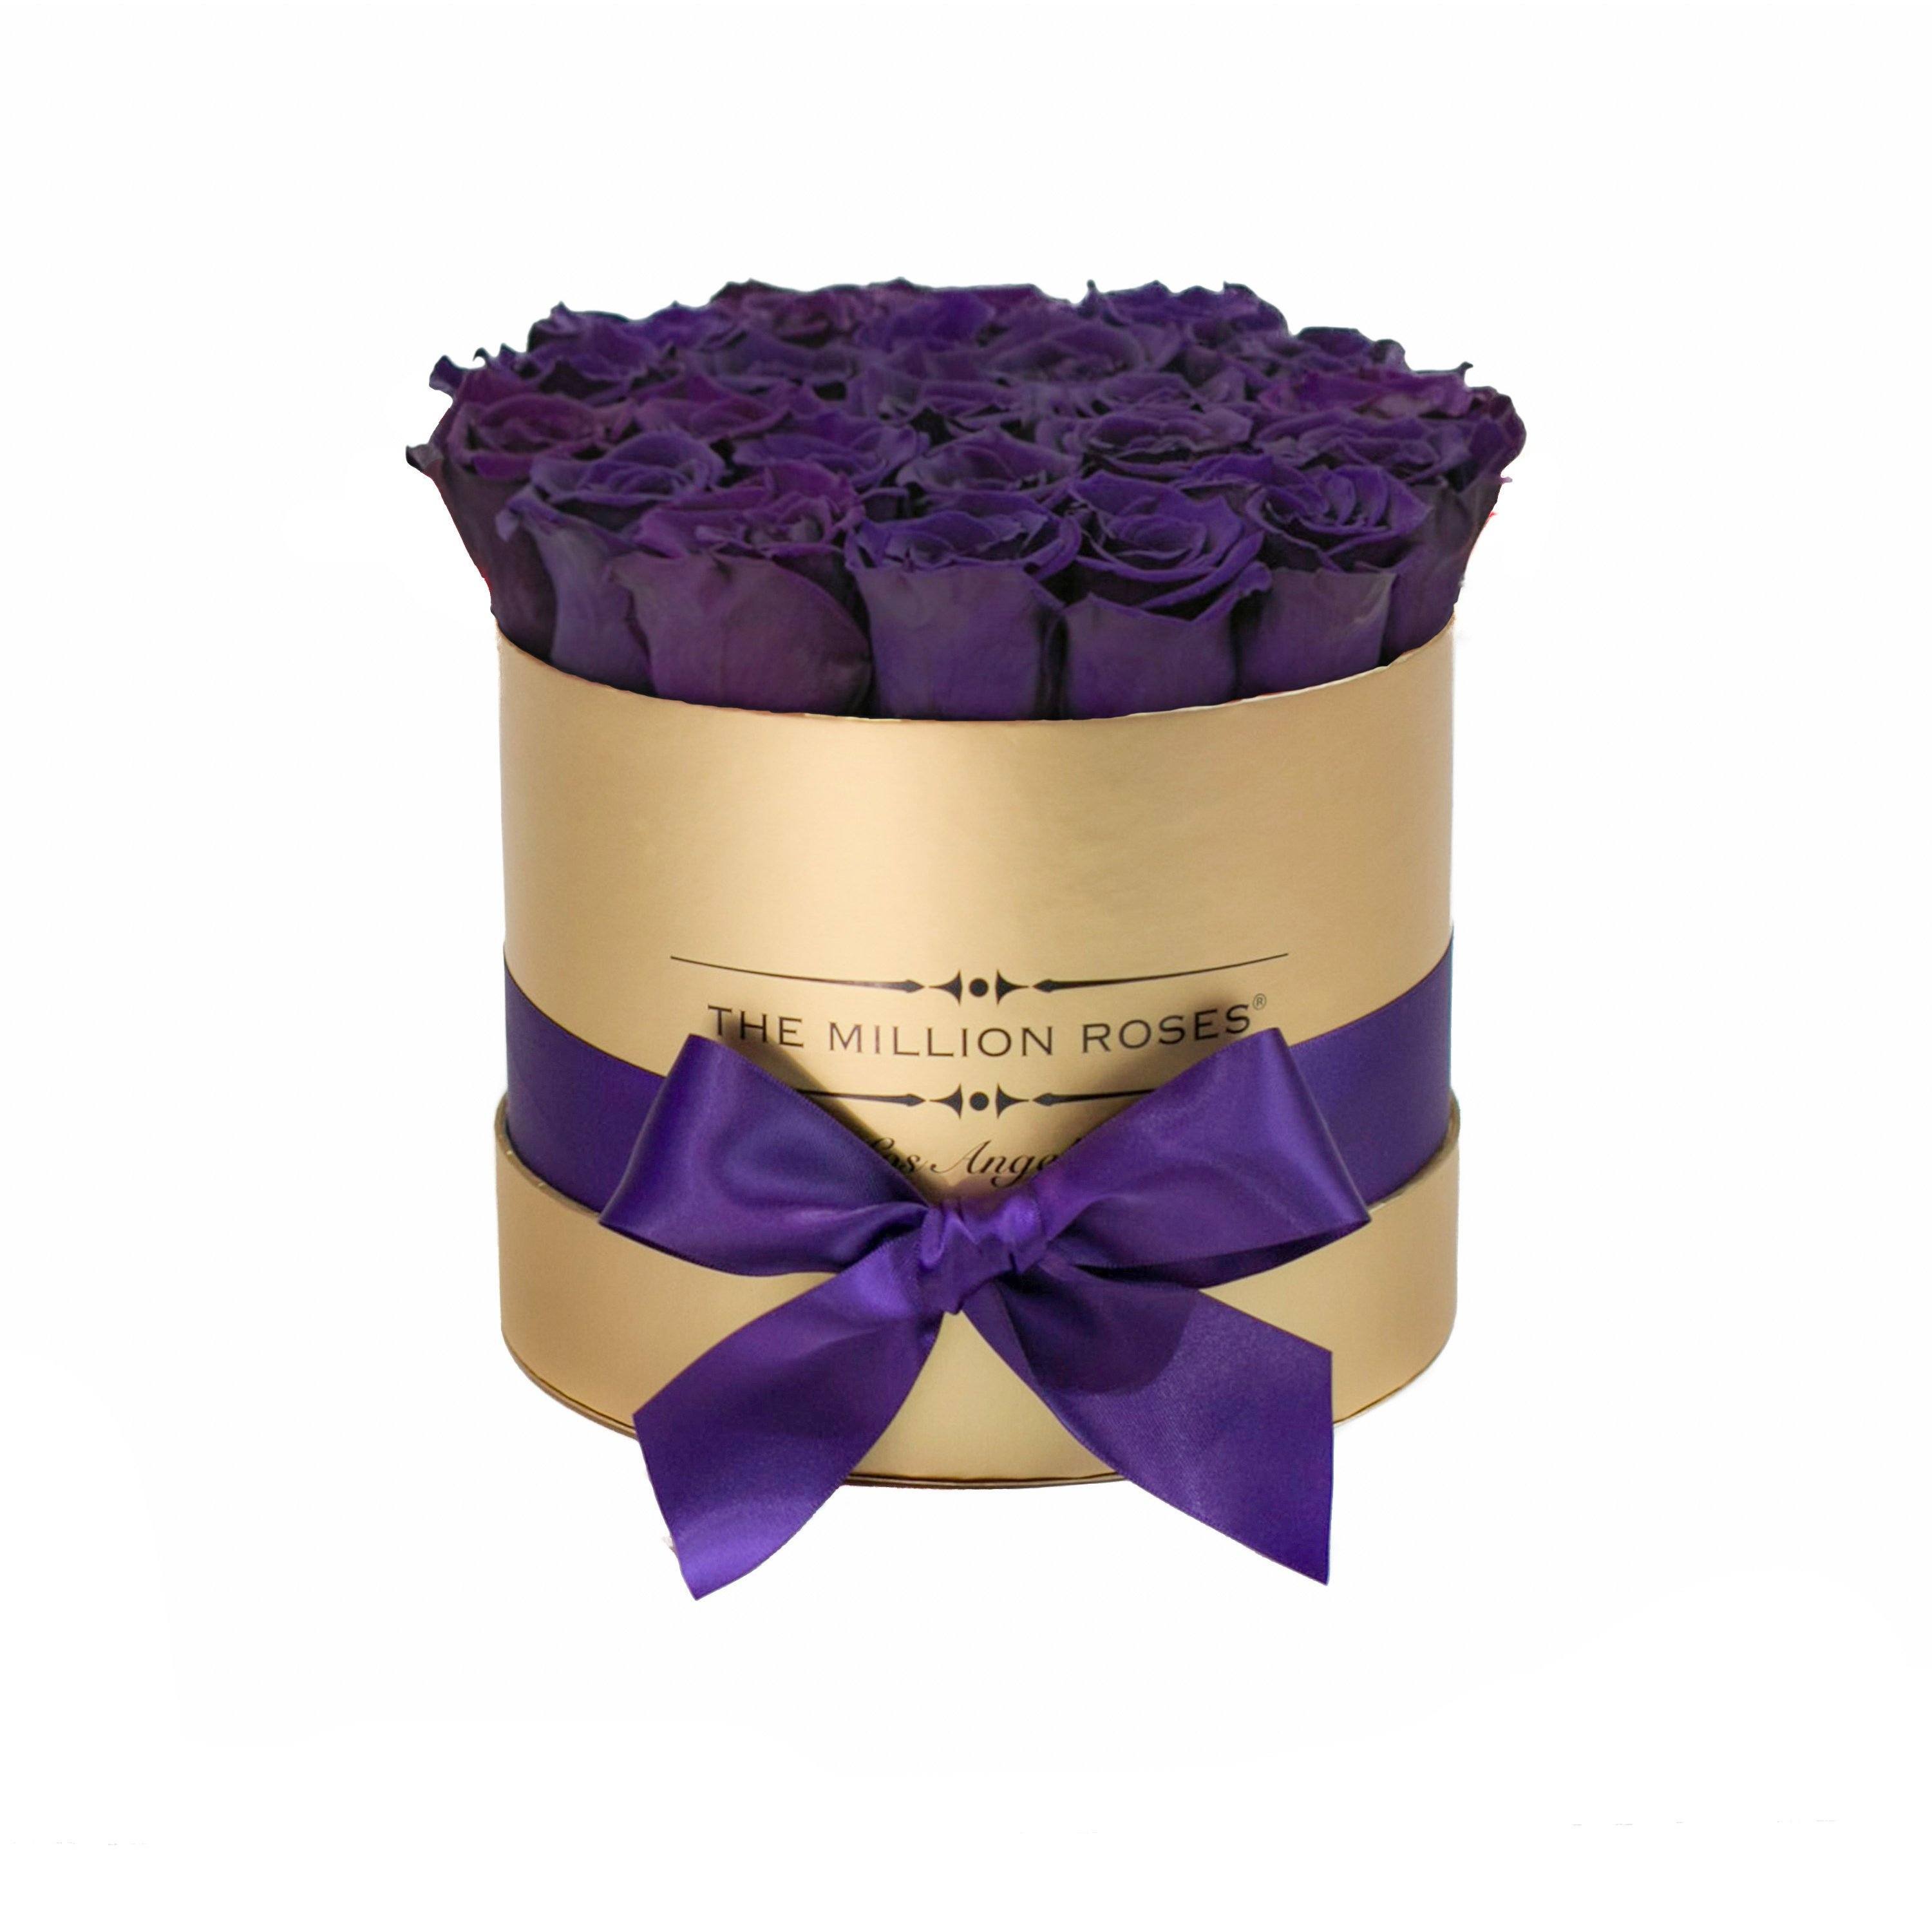 classic round box - gold - dark-purple roses purple eternity roses - the million roses